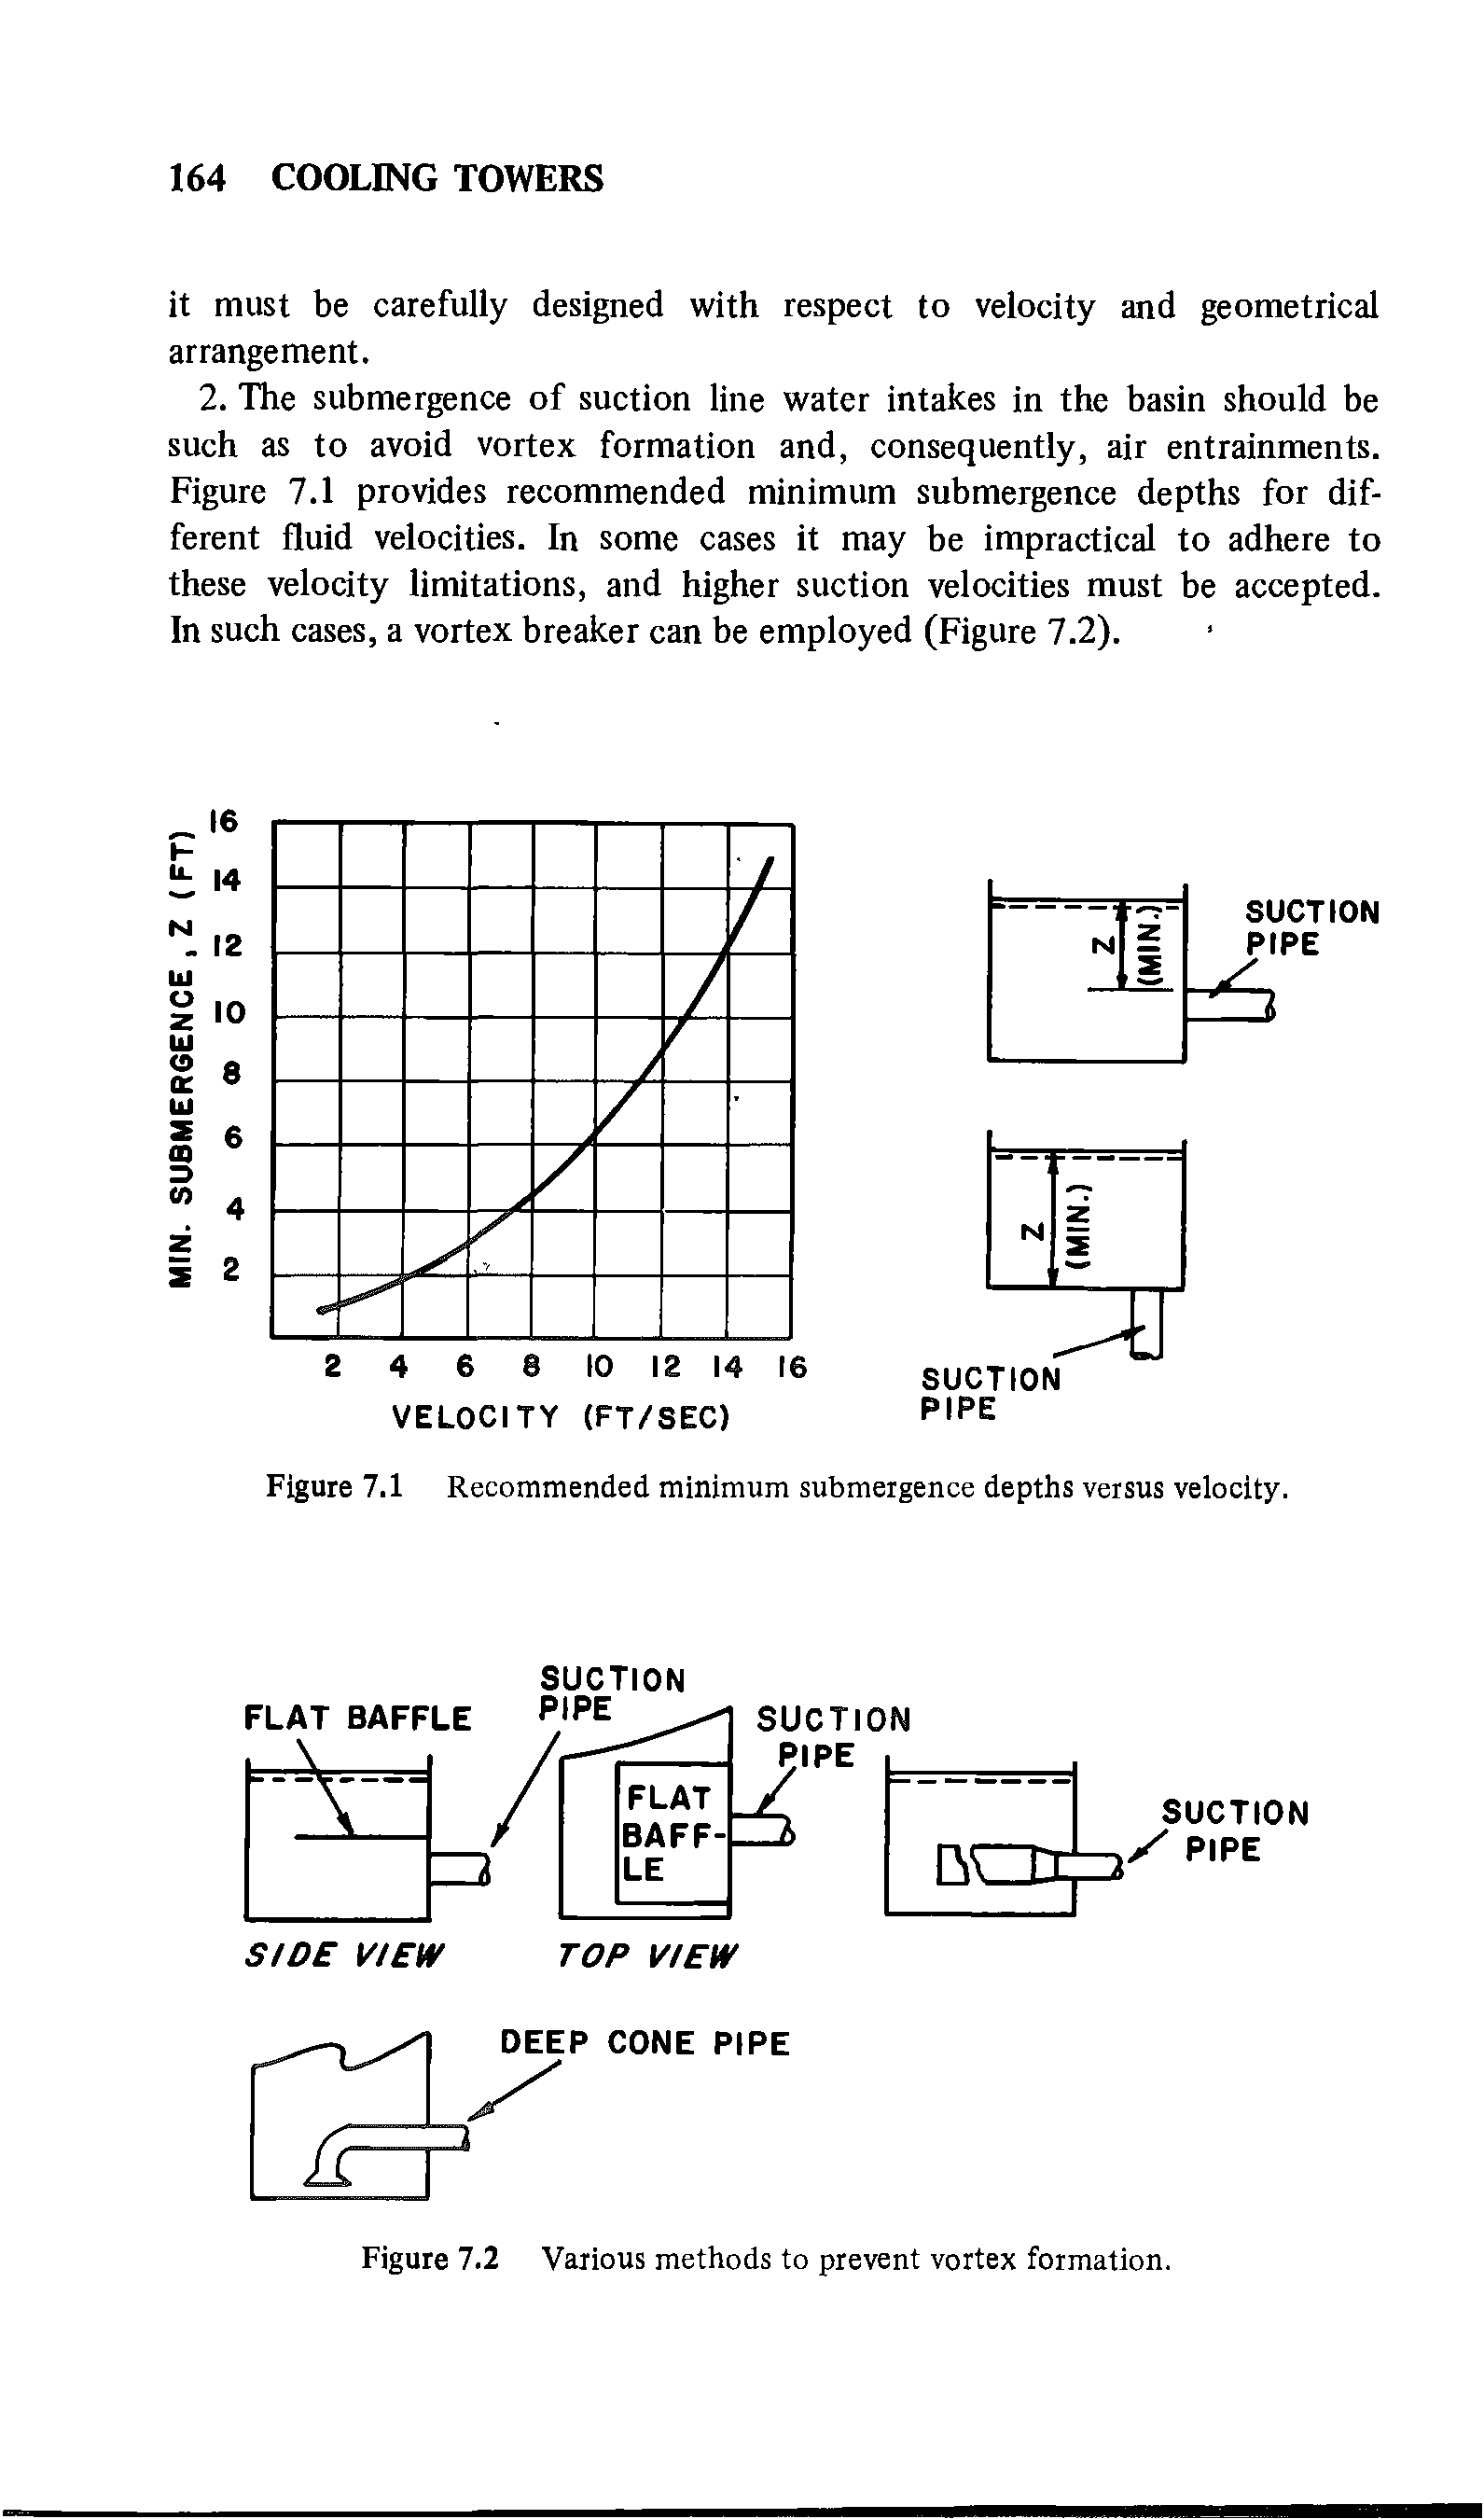 Figure 7.2 Various methods to prevent vortex formation.